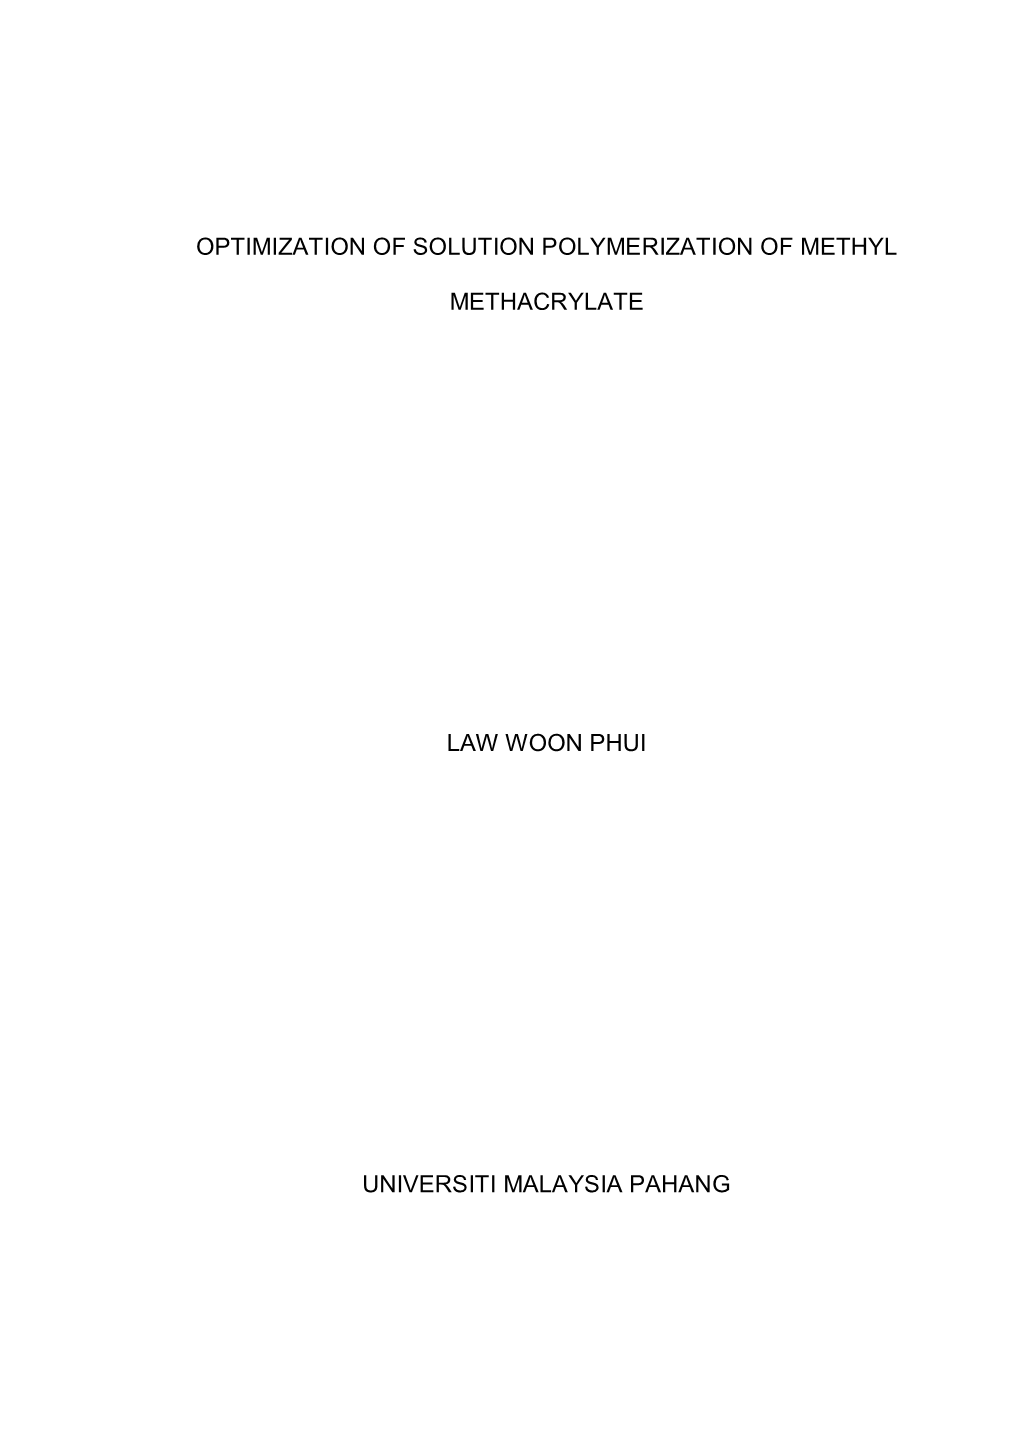 Optimization of Solution Polymerization of Methyl Methacrylate Law Woon